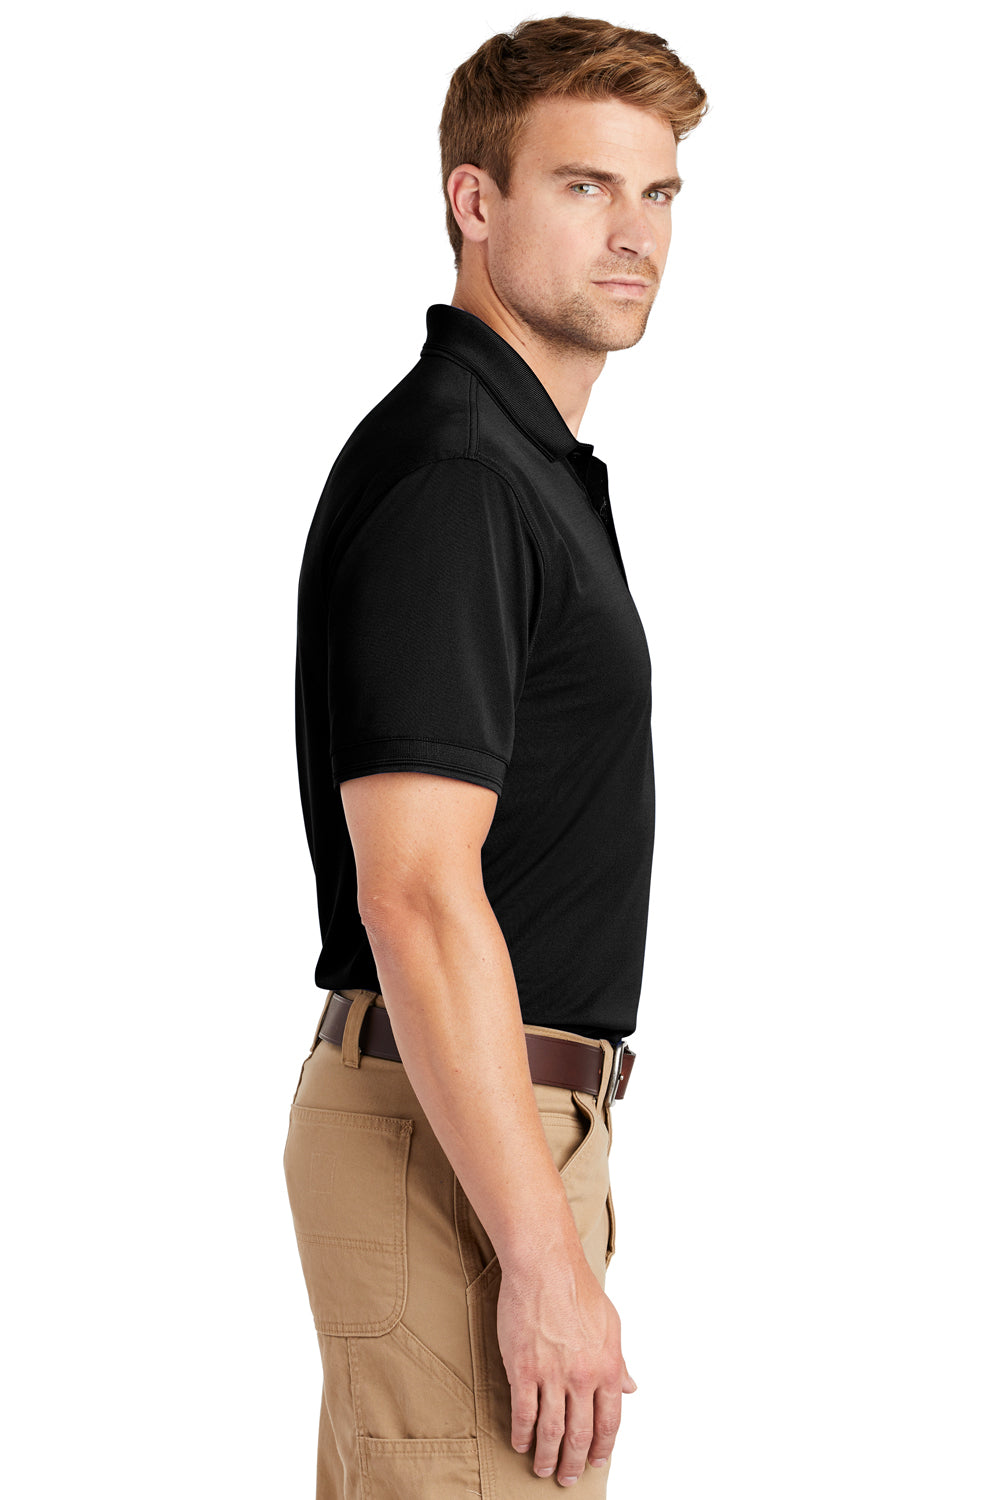 CornerStone CS4020 Mens Industrial Moisture Wicking Short Sleeve Polo Shirt Black Side